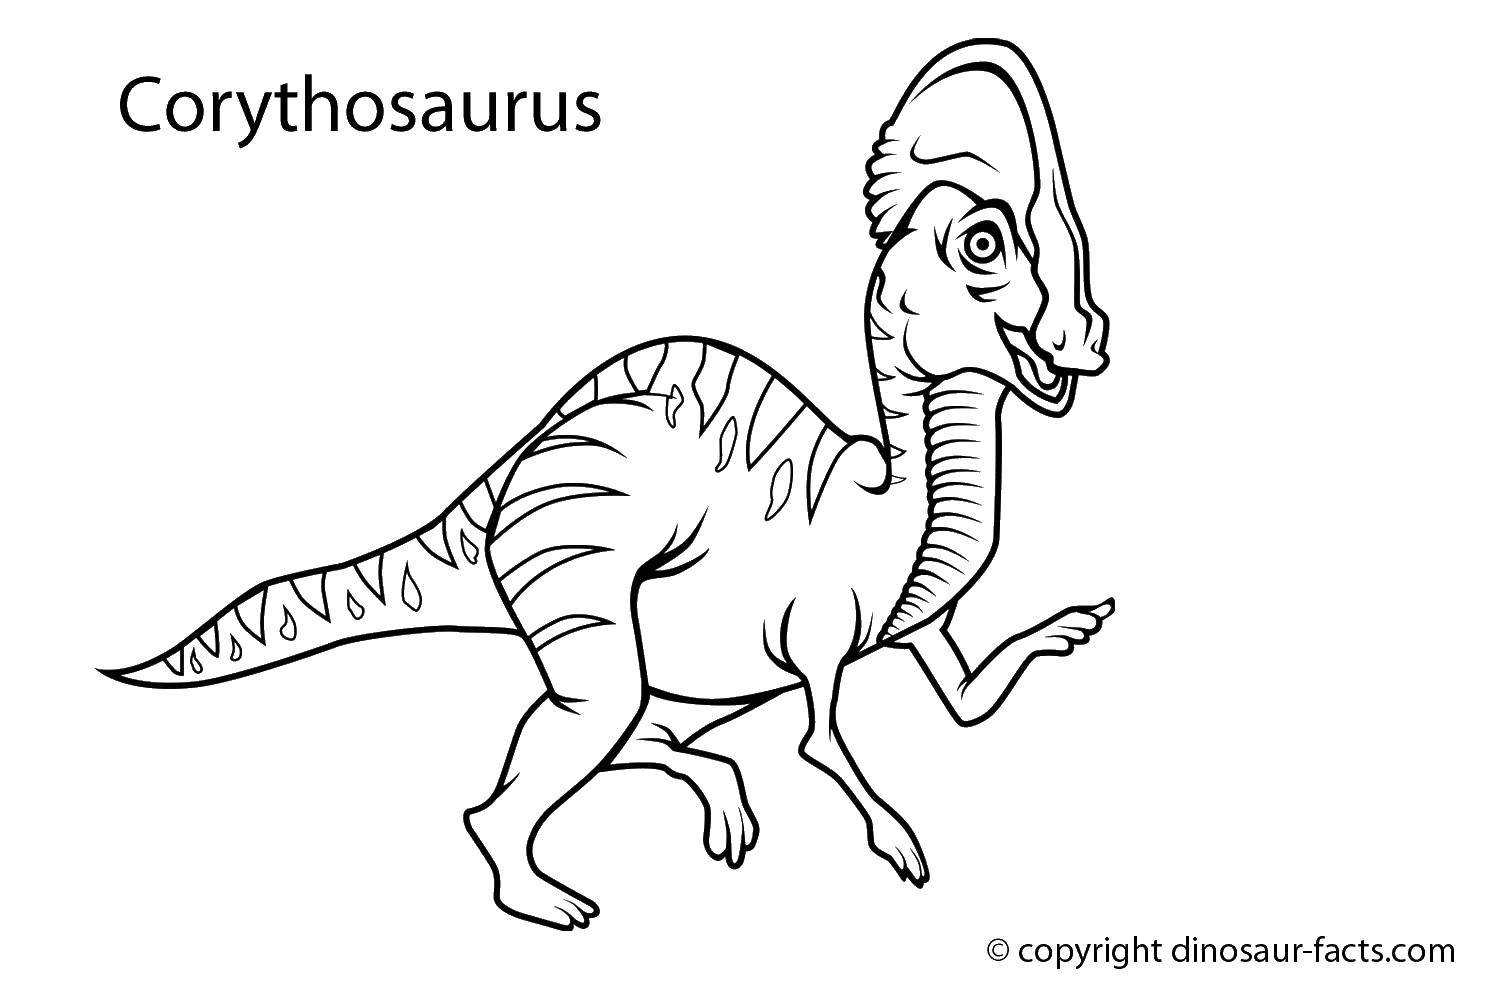 Coloring Ceratosaur. Category dinosaur. Tags:  ceratosaur, dinosaur.